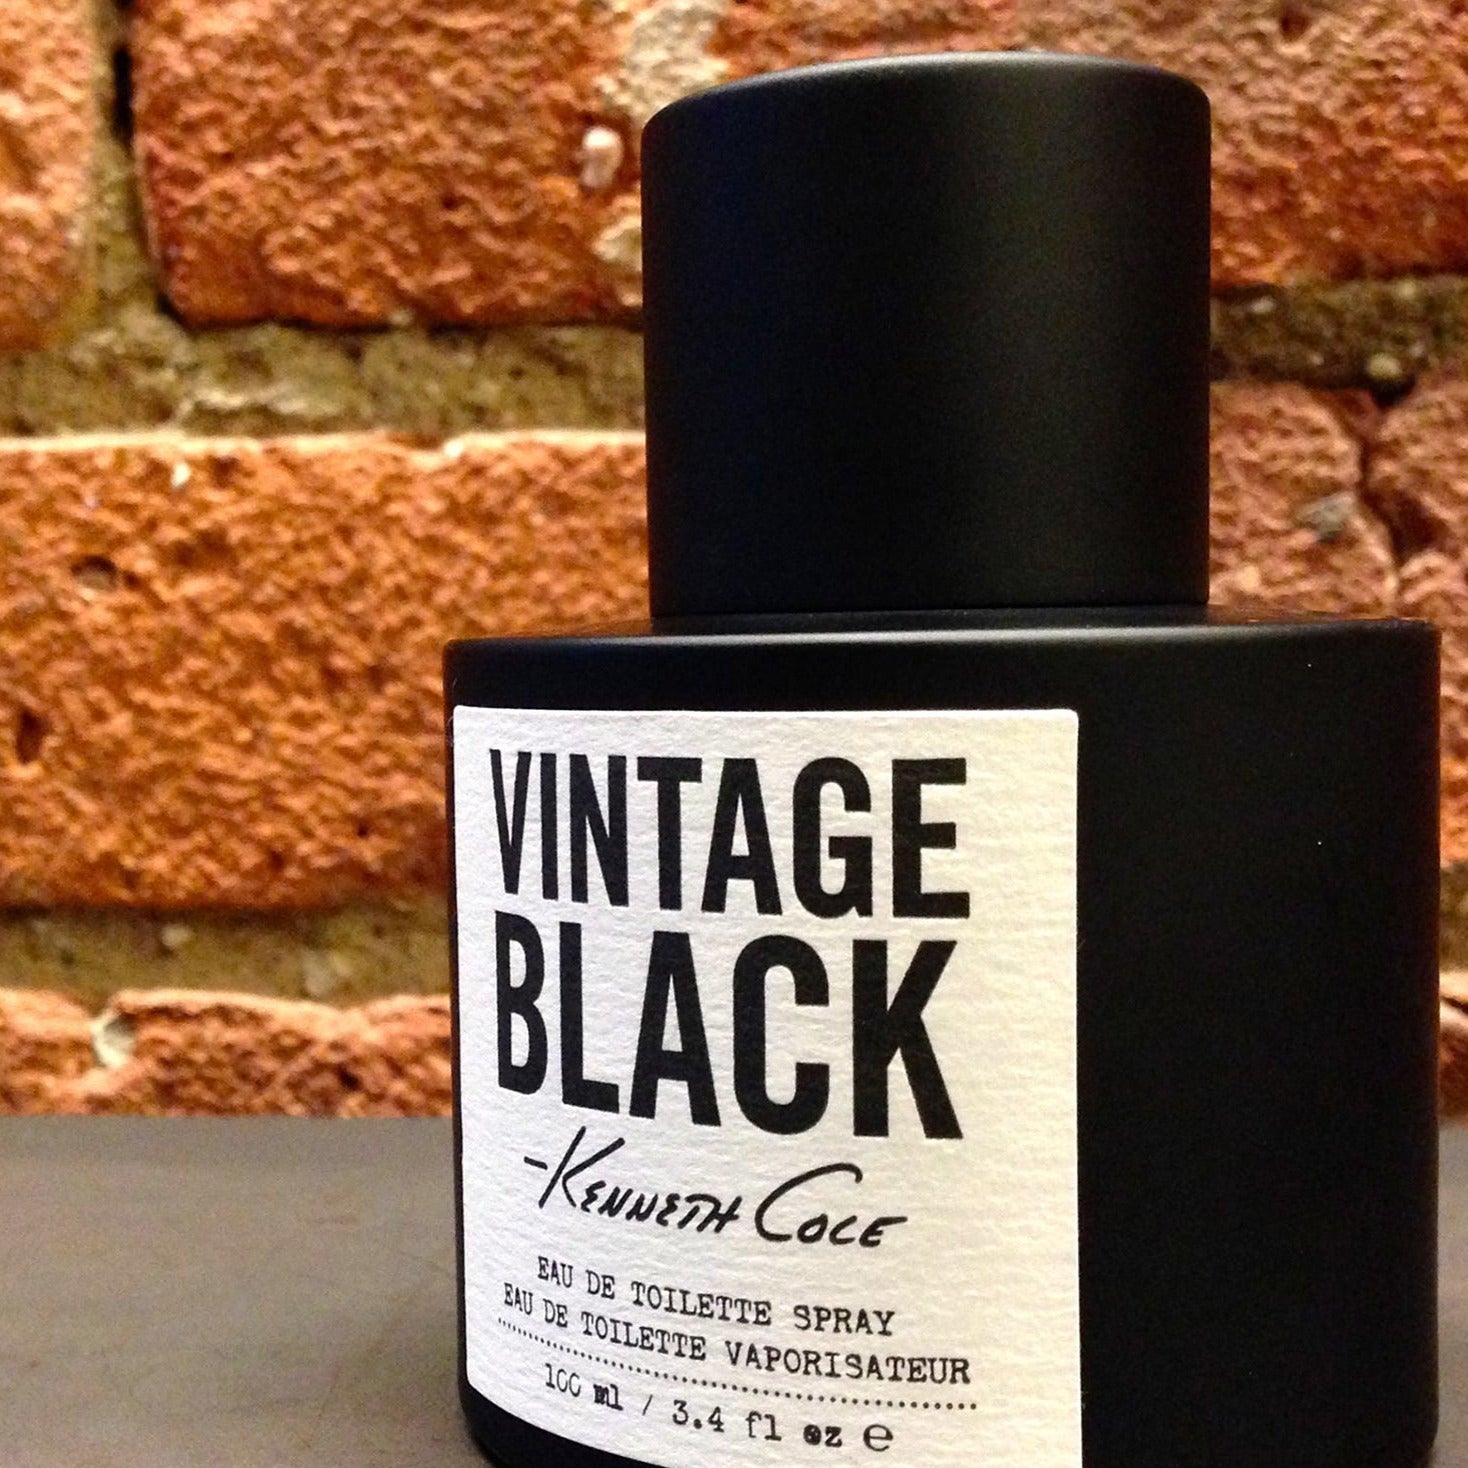 Kenneth Cole Vintage Black EDT | My Perfume Shop Australia